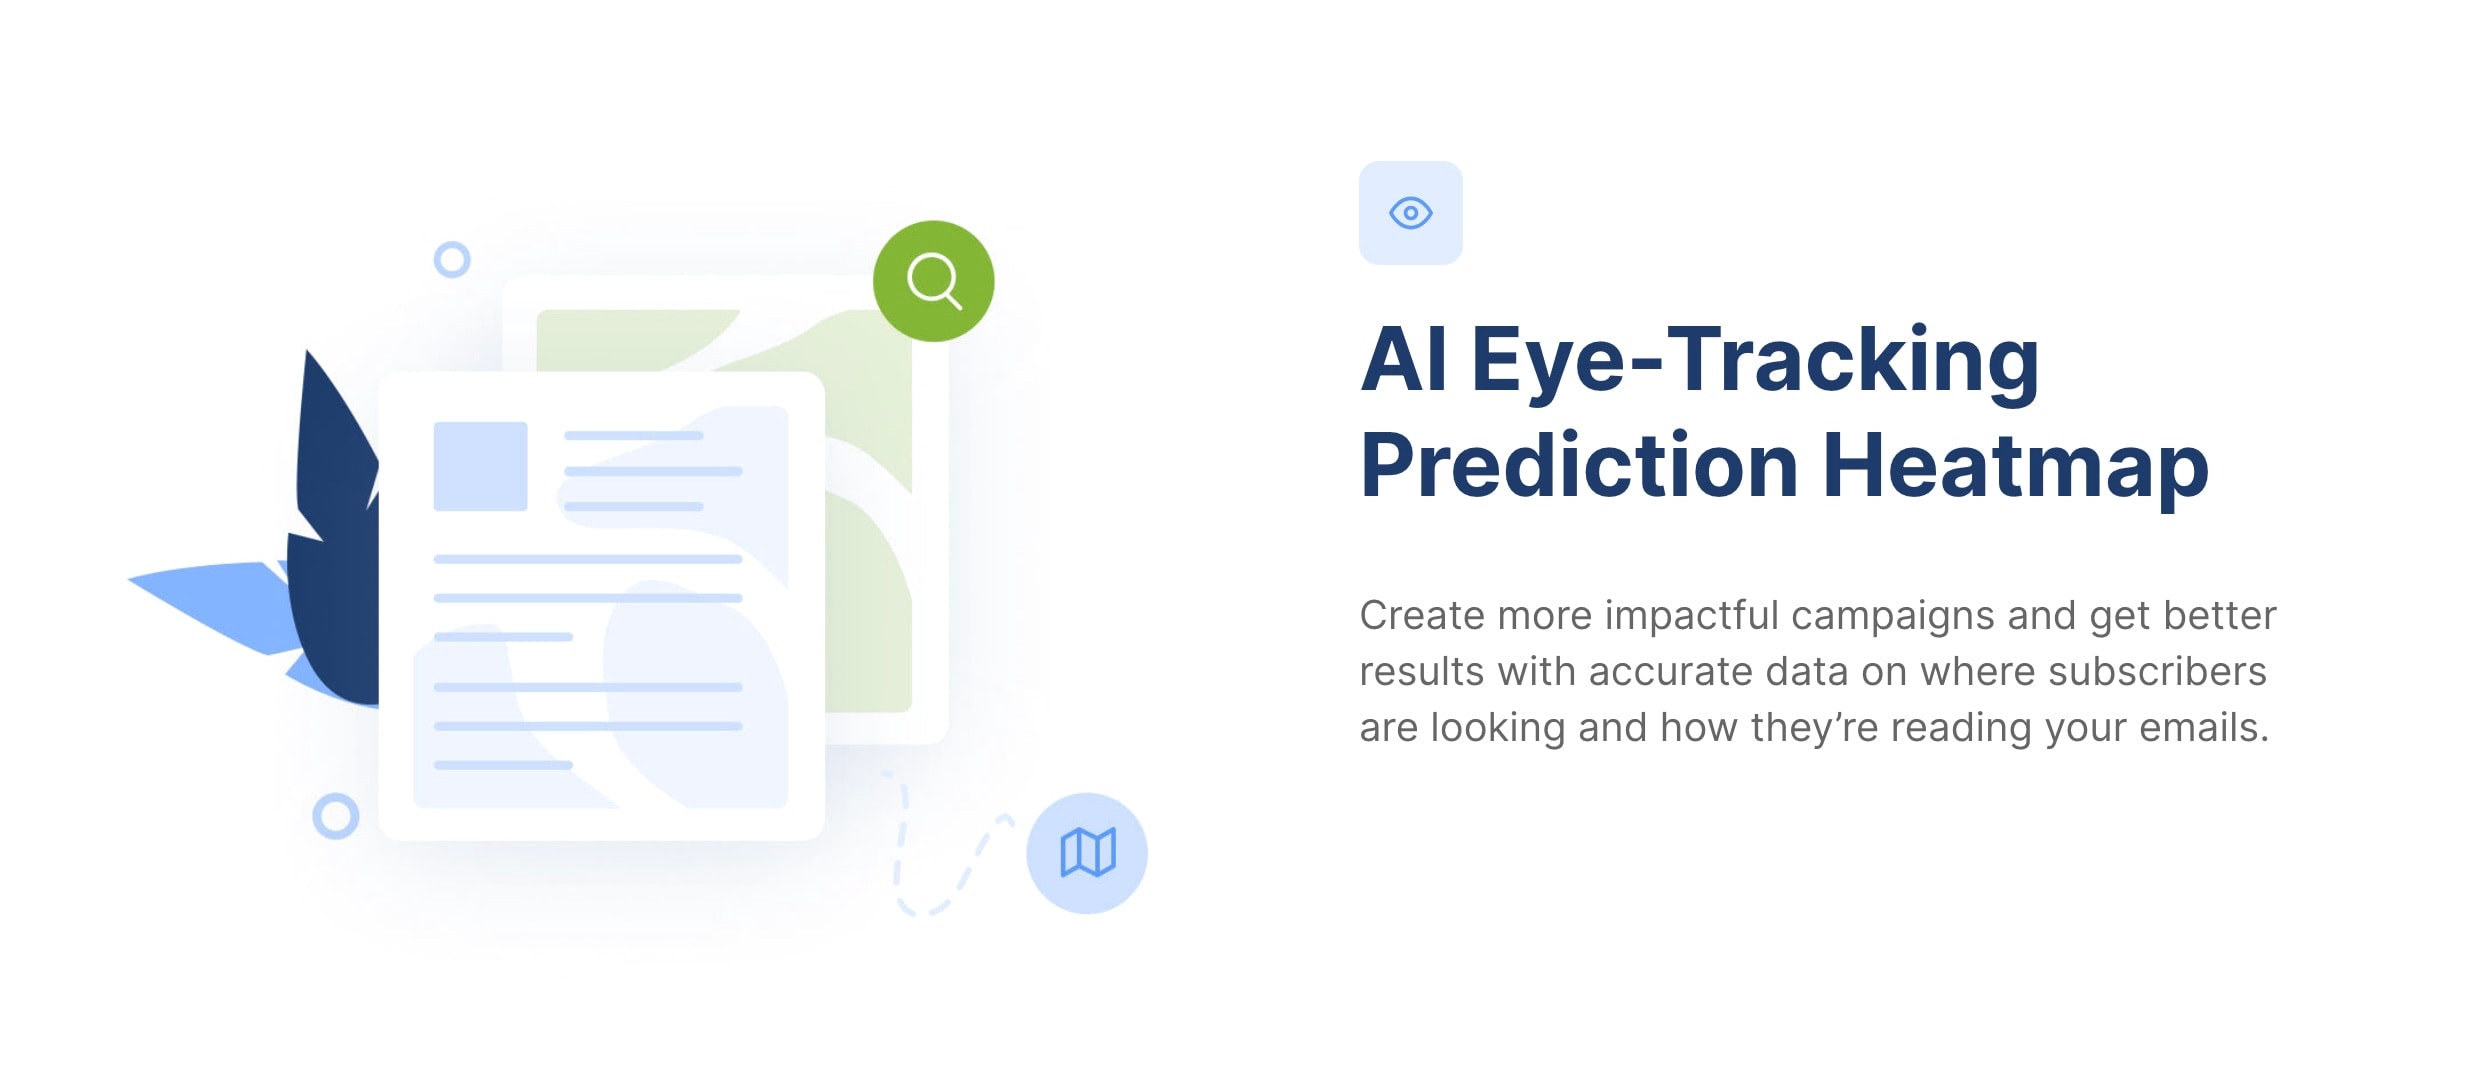 AI Eye-Tracking Prediction Heatmap